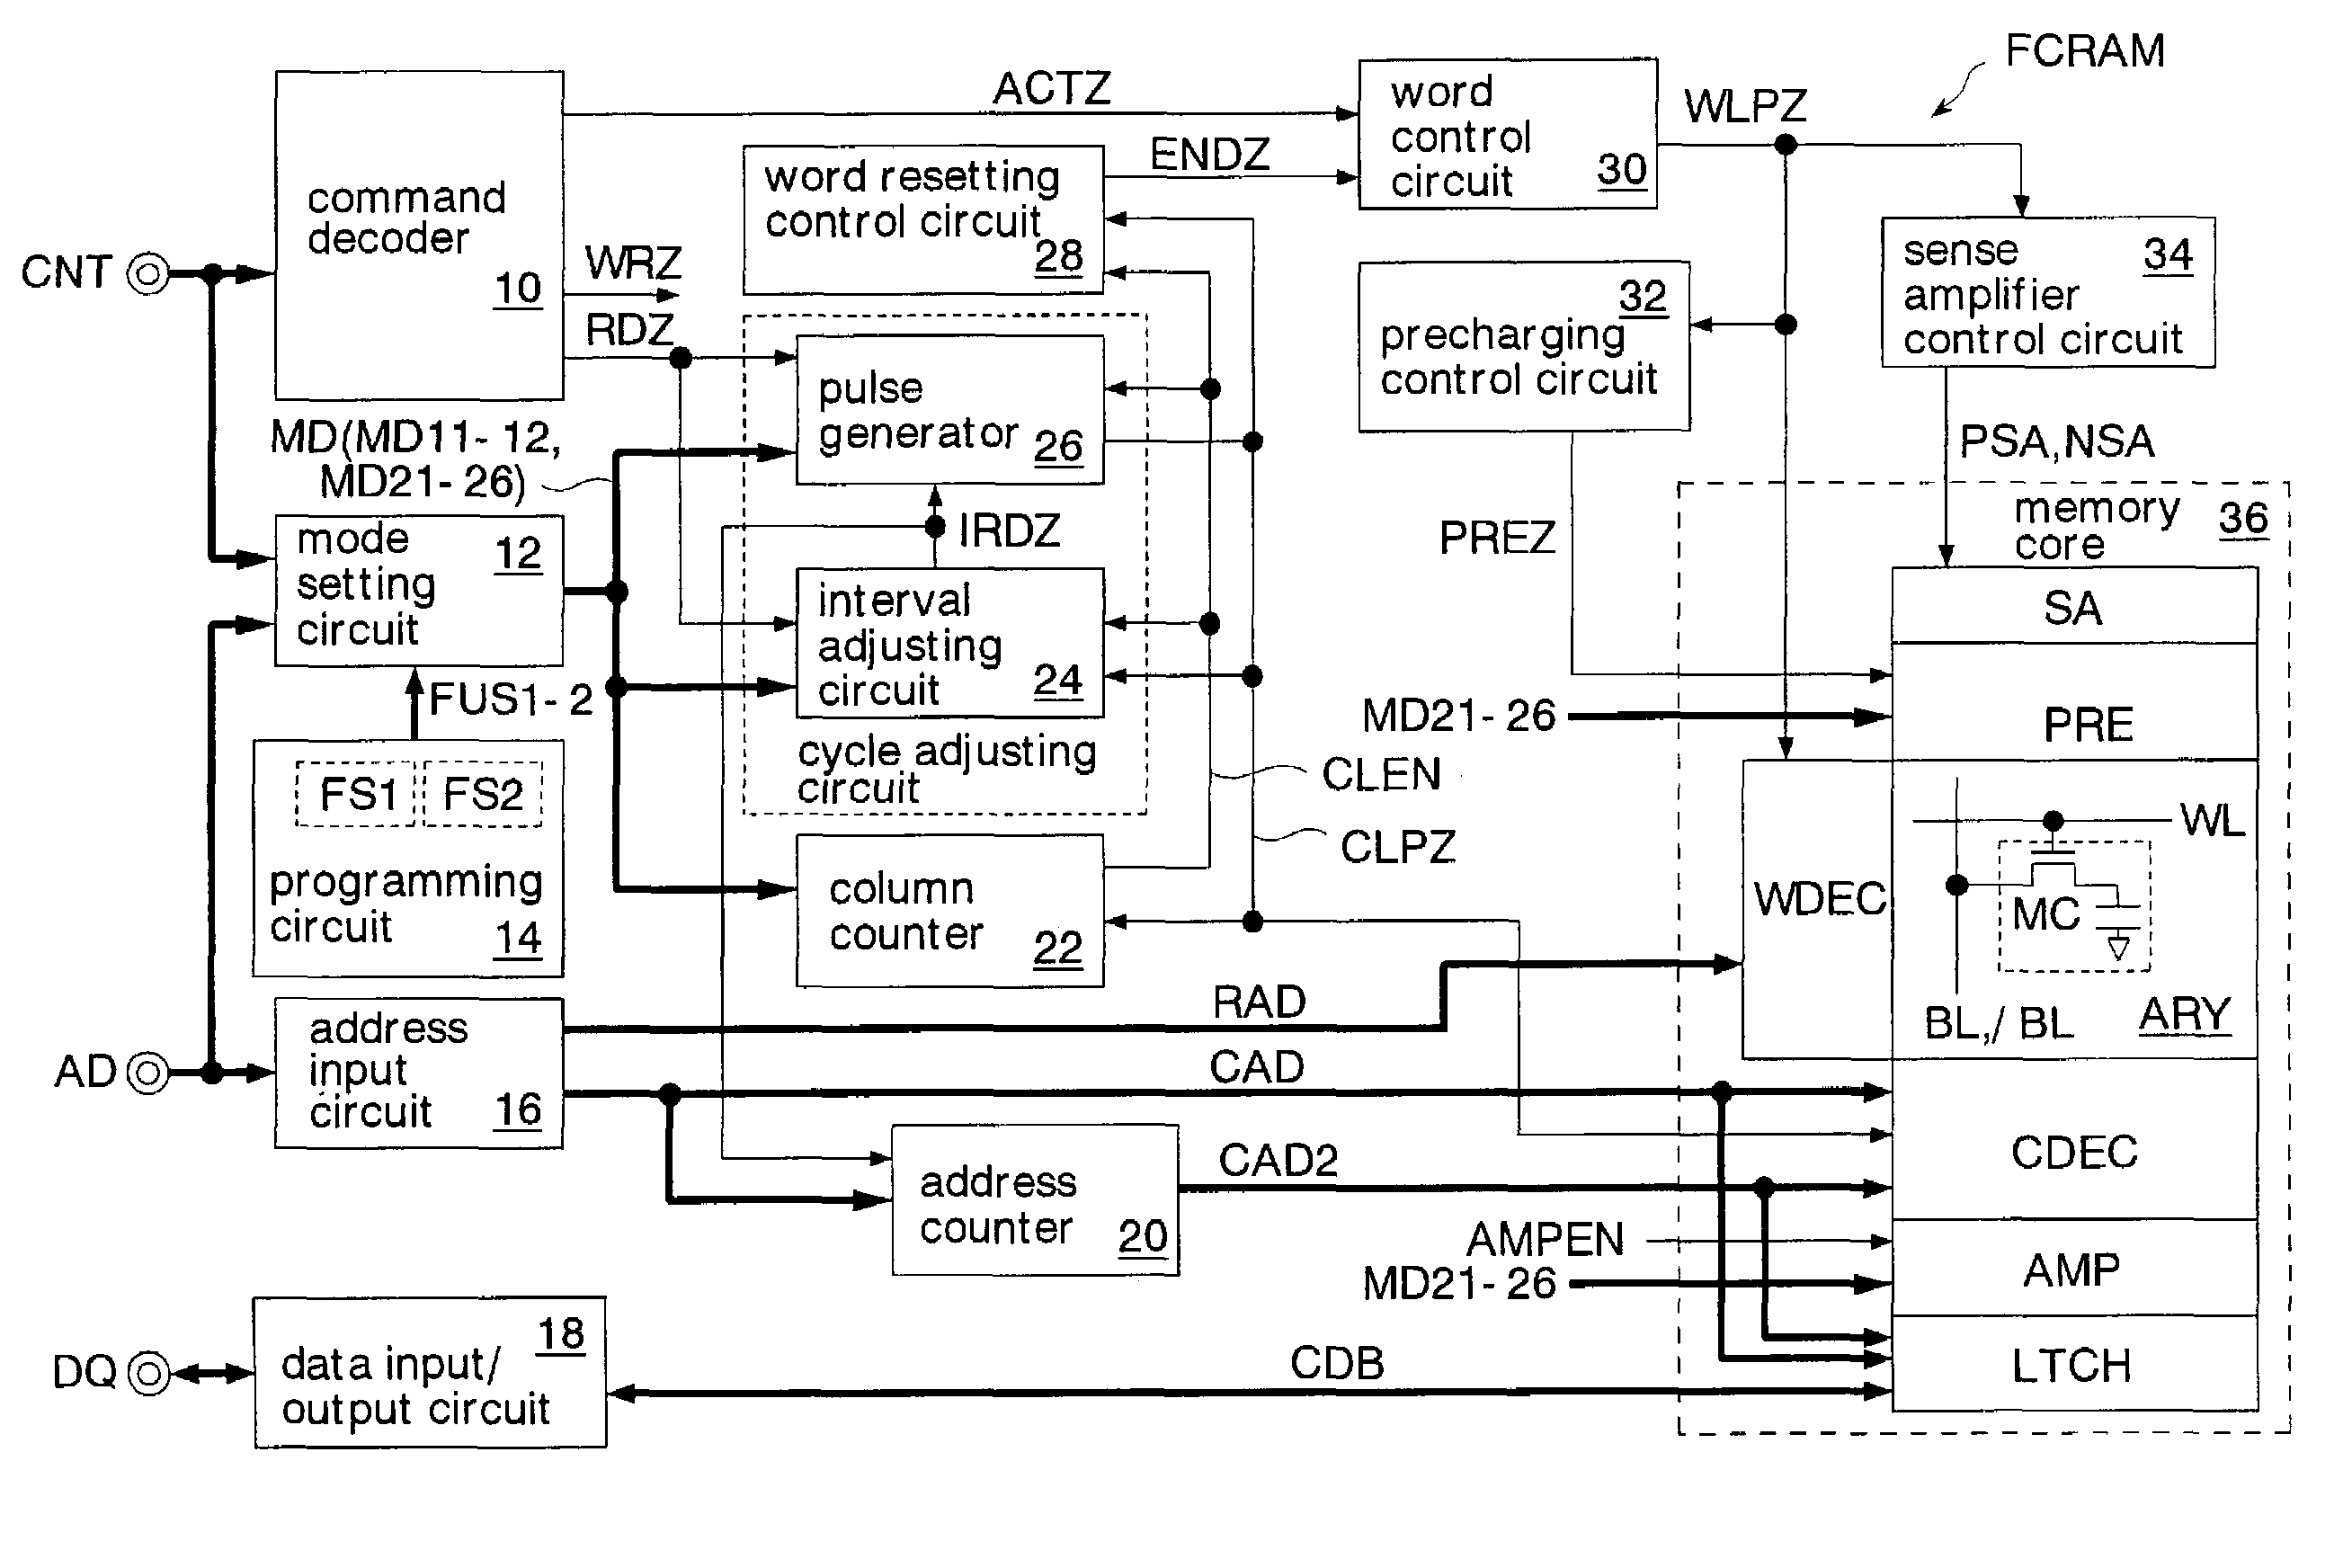 Semiconductor memory having a pulse generator for generating column pulses